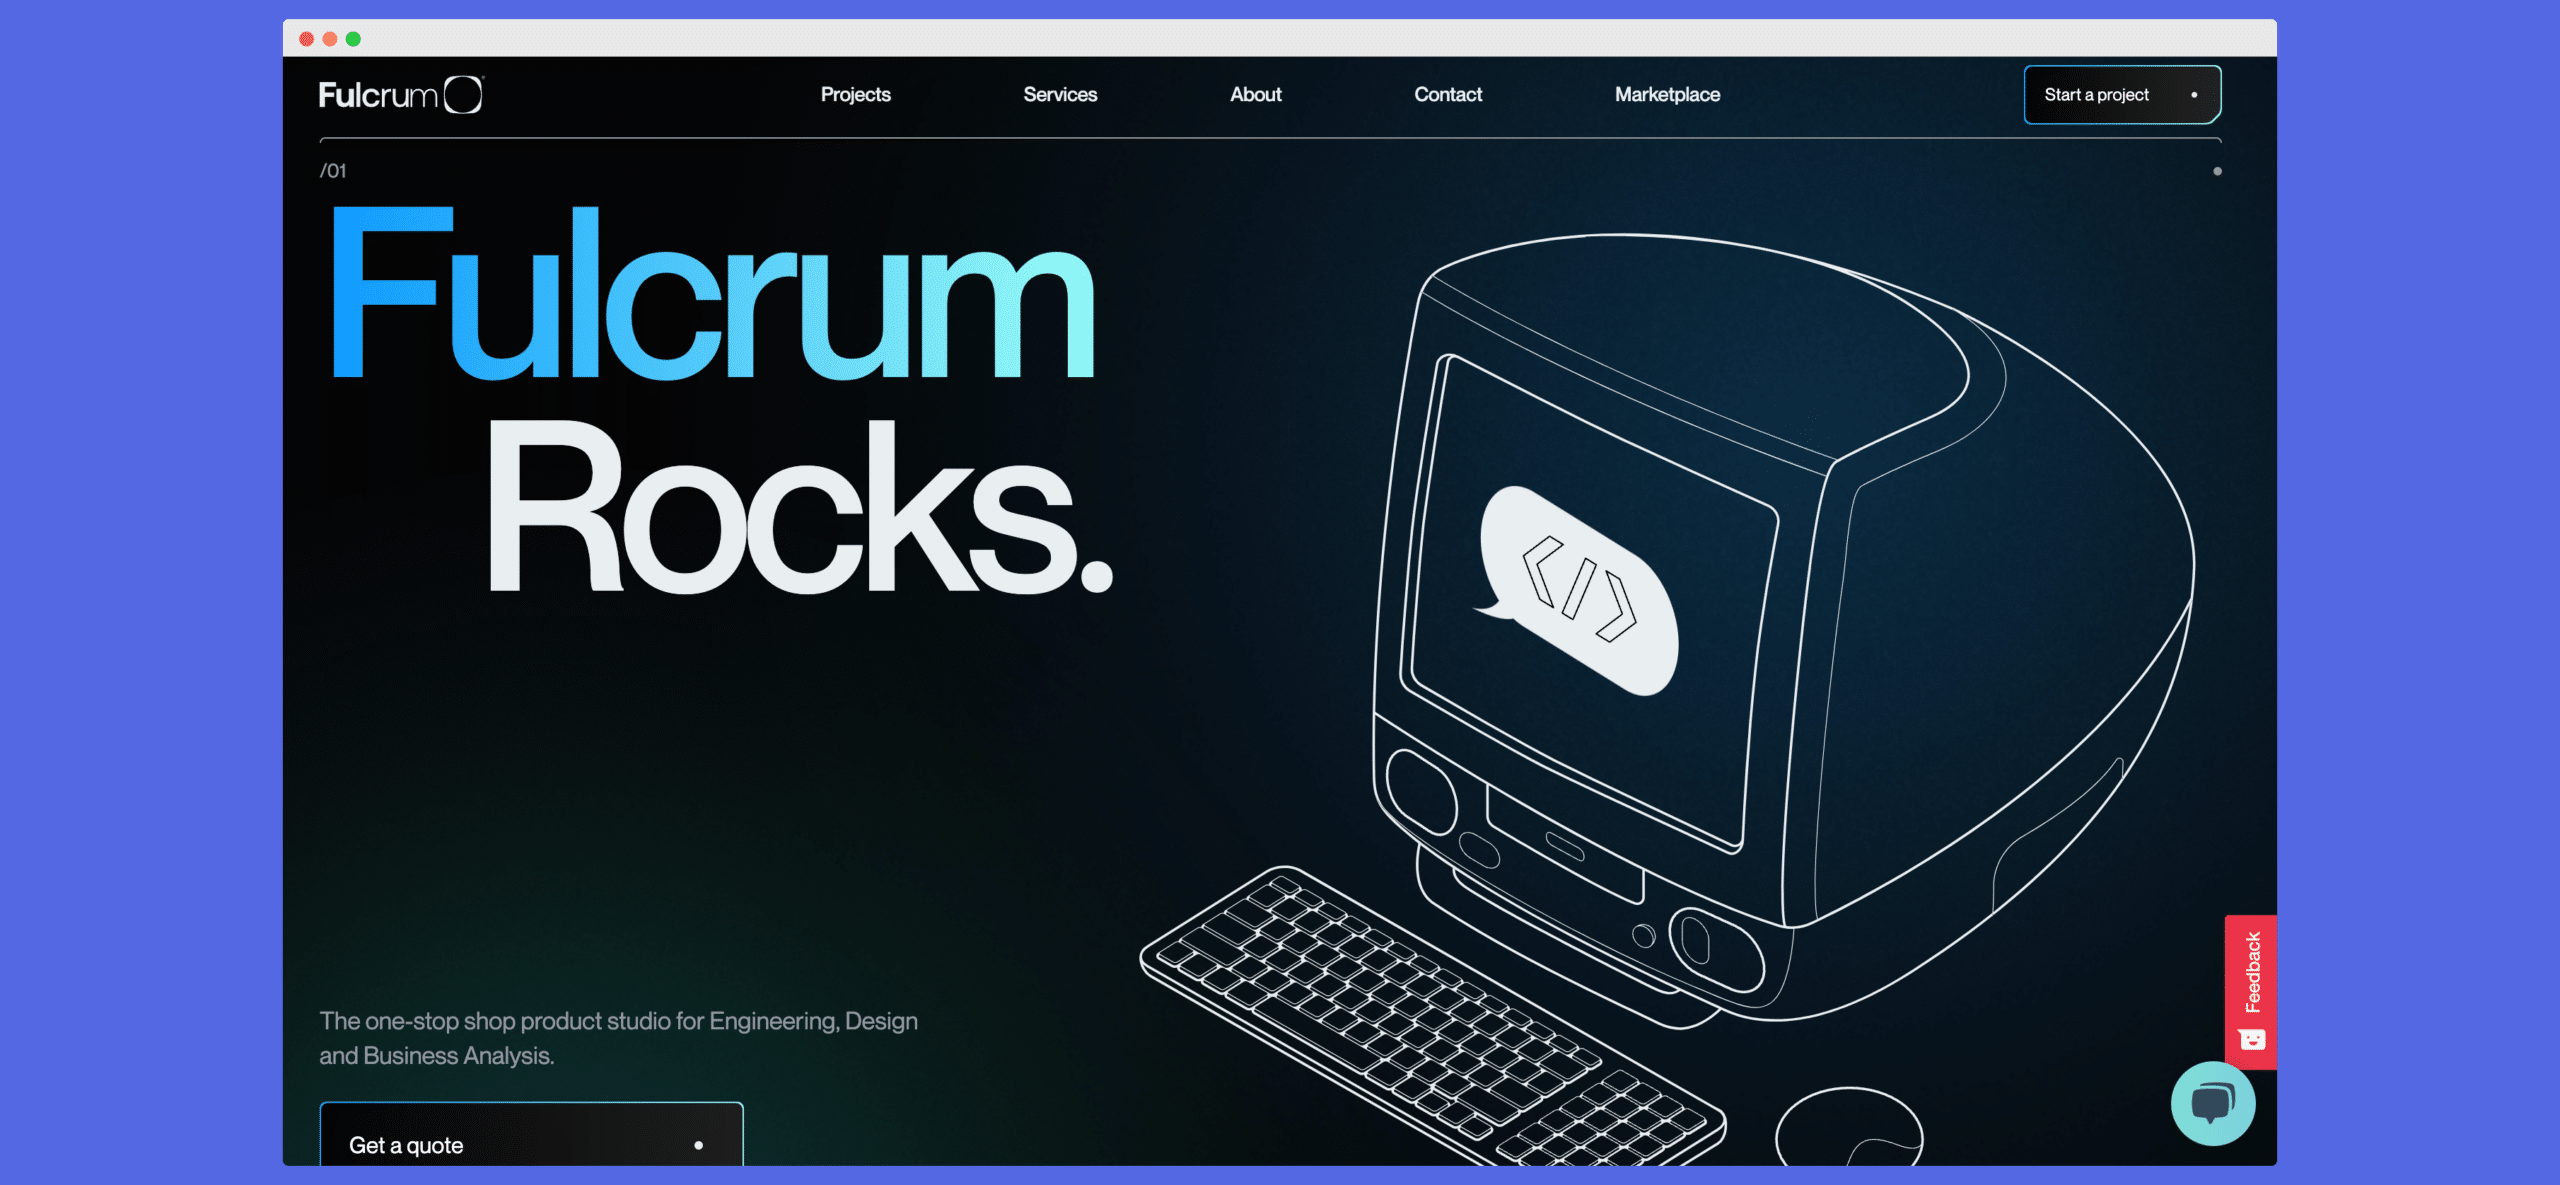 fulcrum rocks - one stop shop digital product studio website